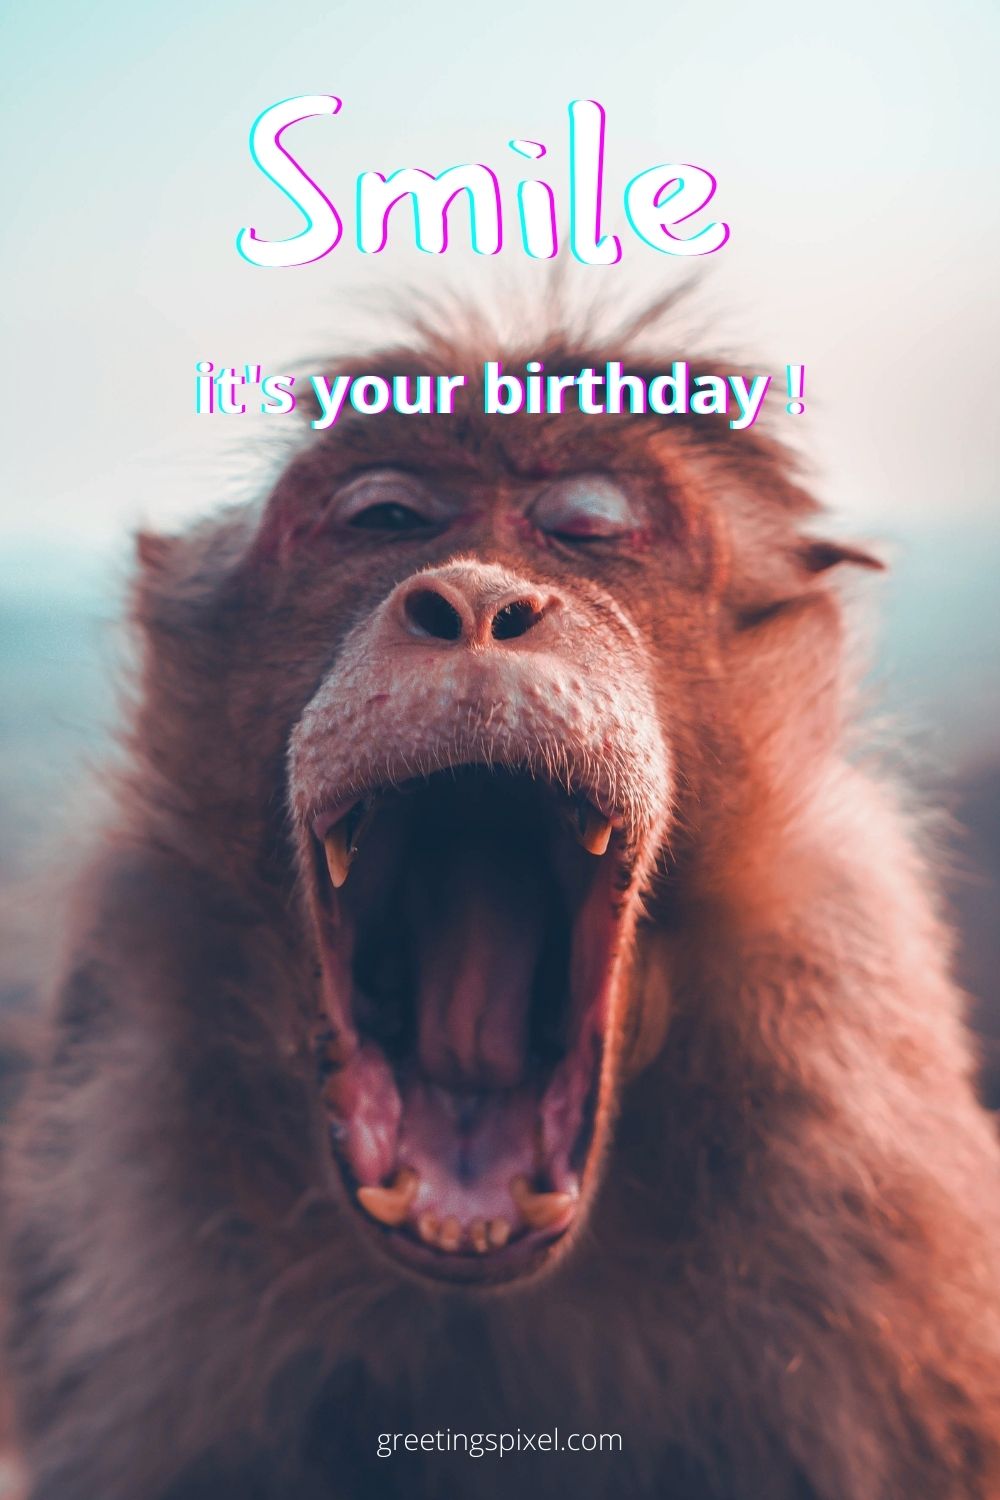 20+ Happy Birthday Images Funny - greetingspixel.com